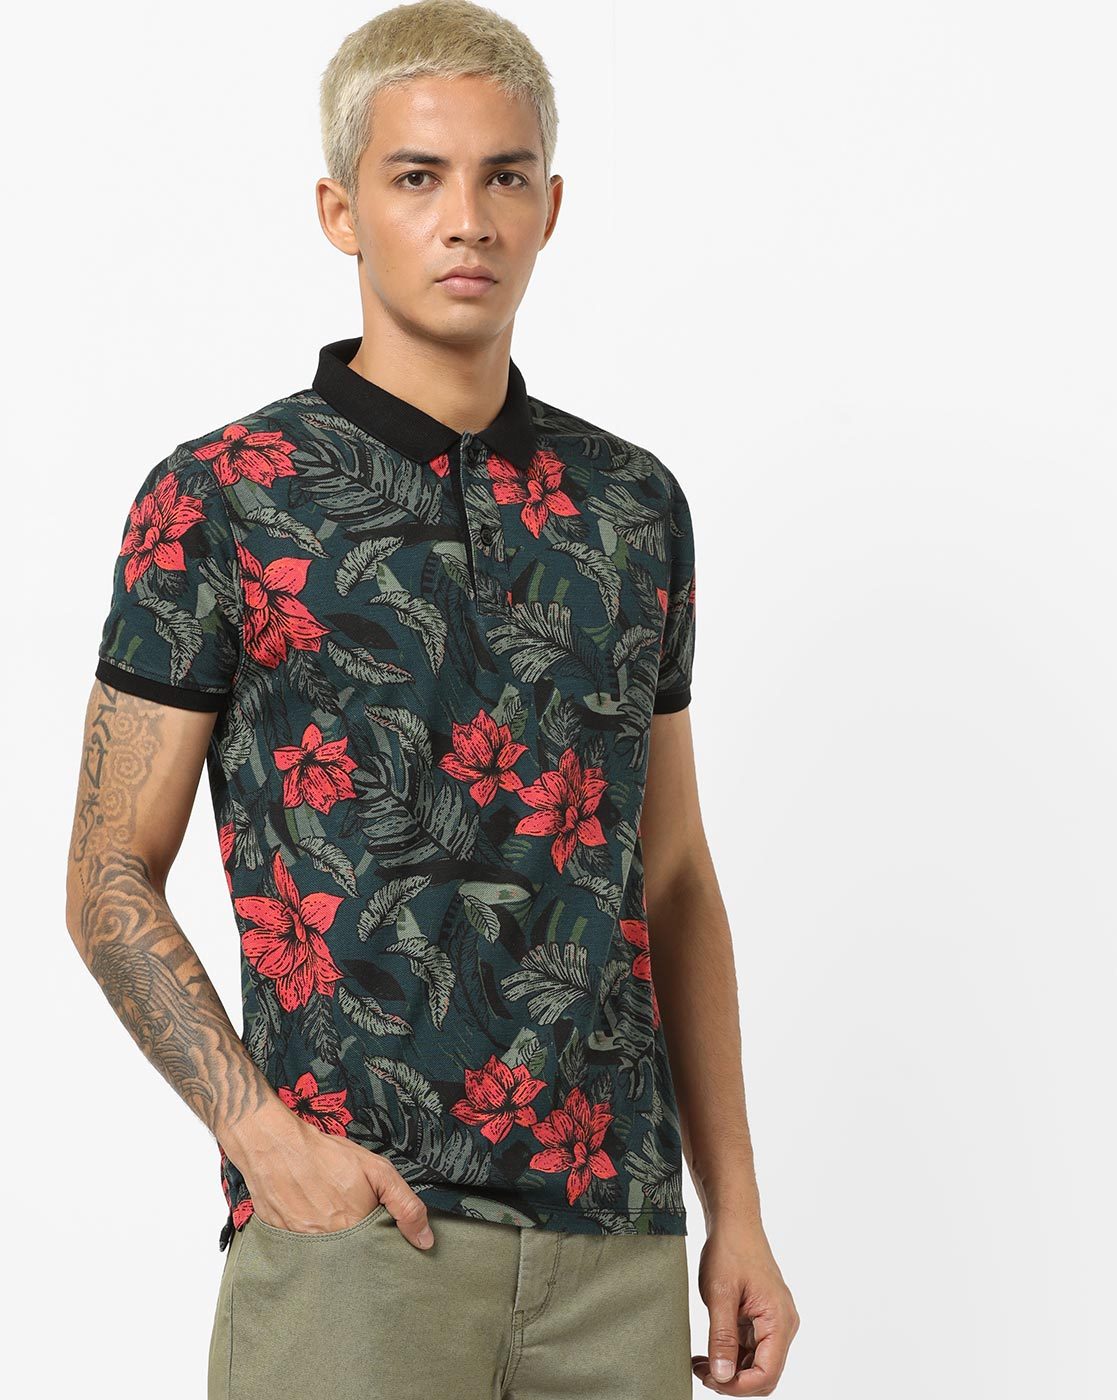 floral print t shirt mens india